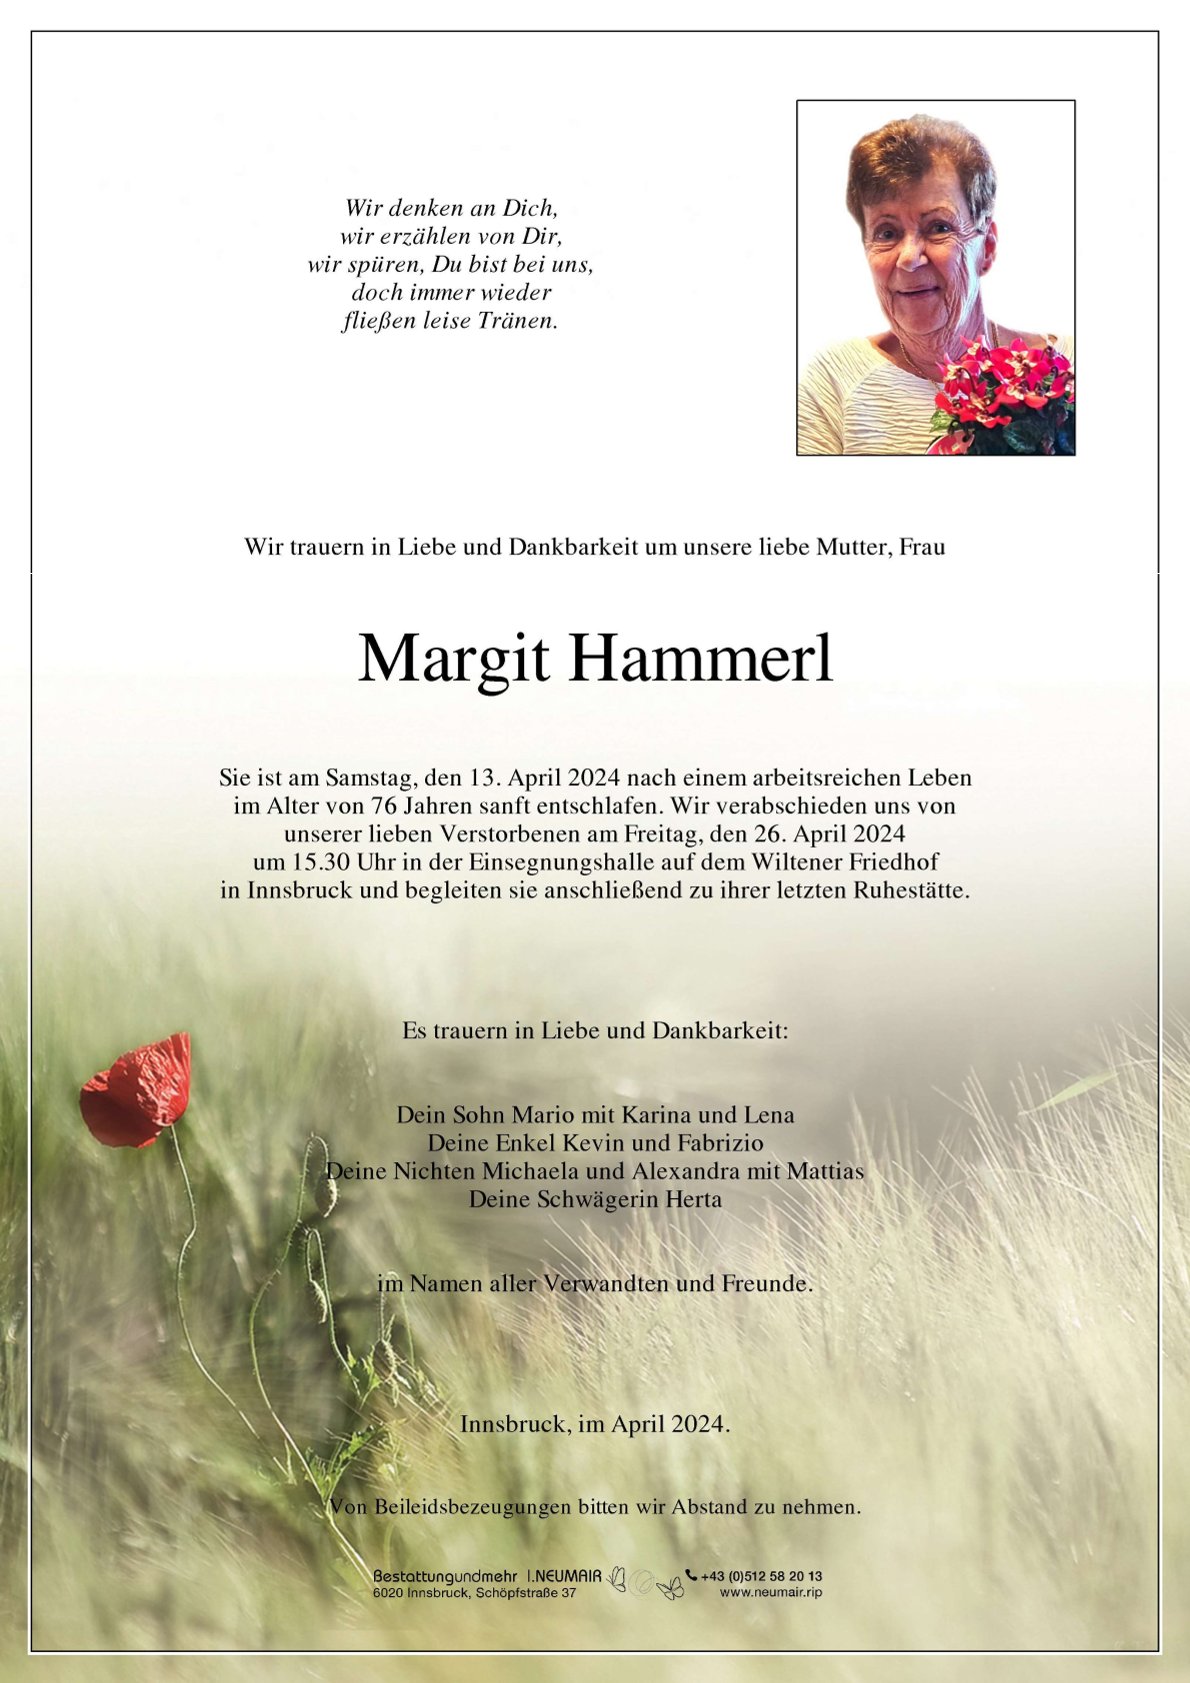 Margit Hammerl